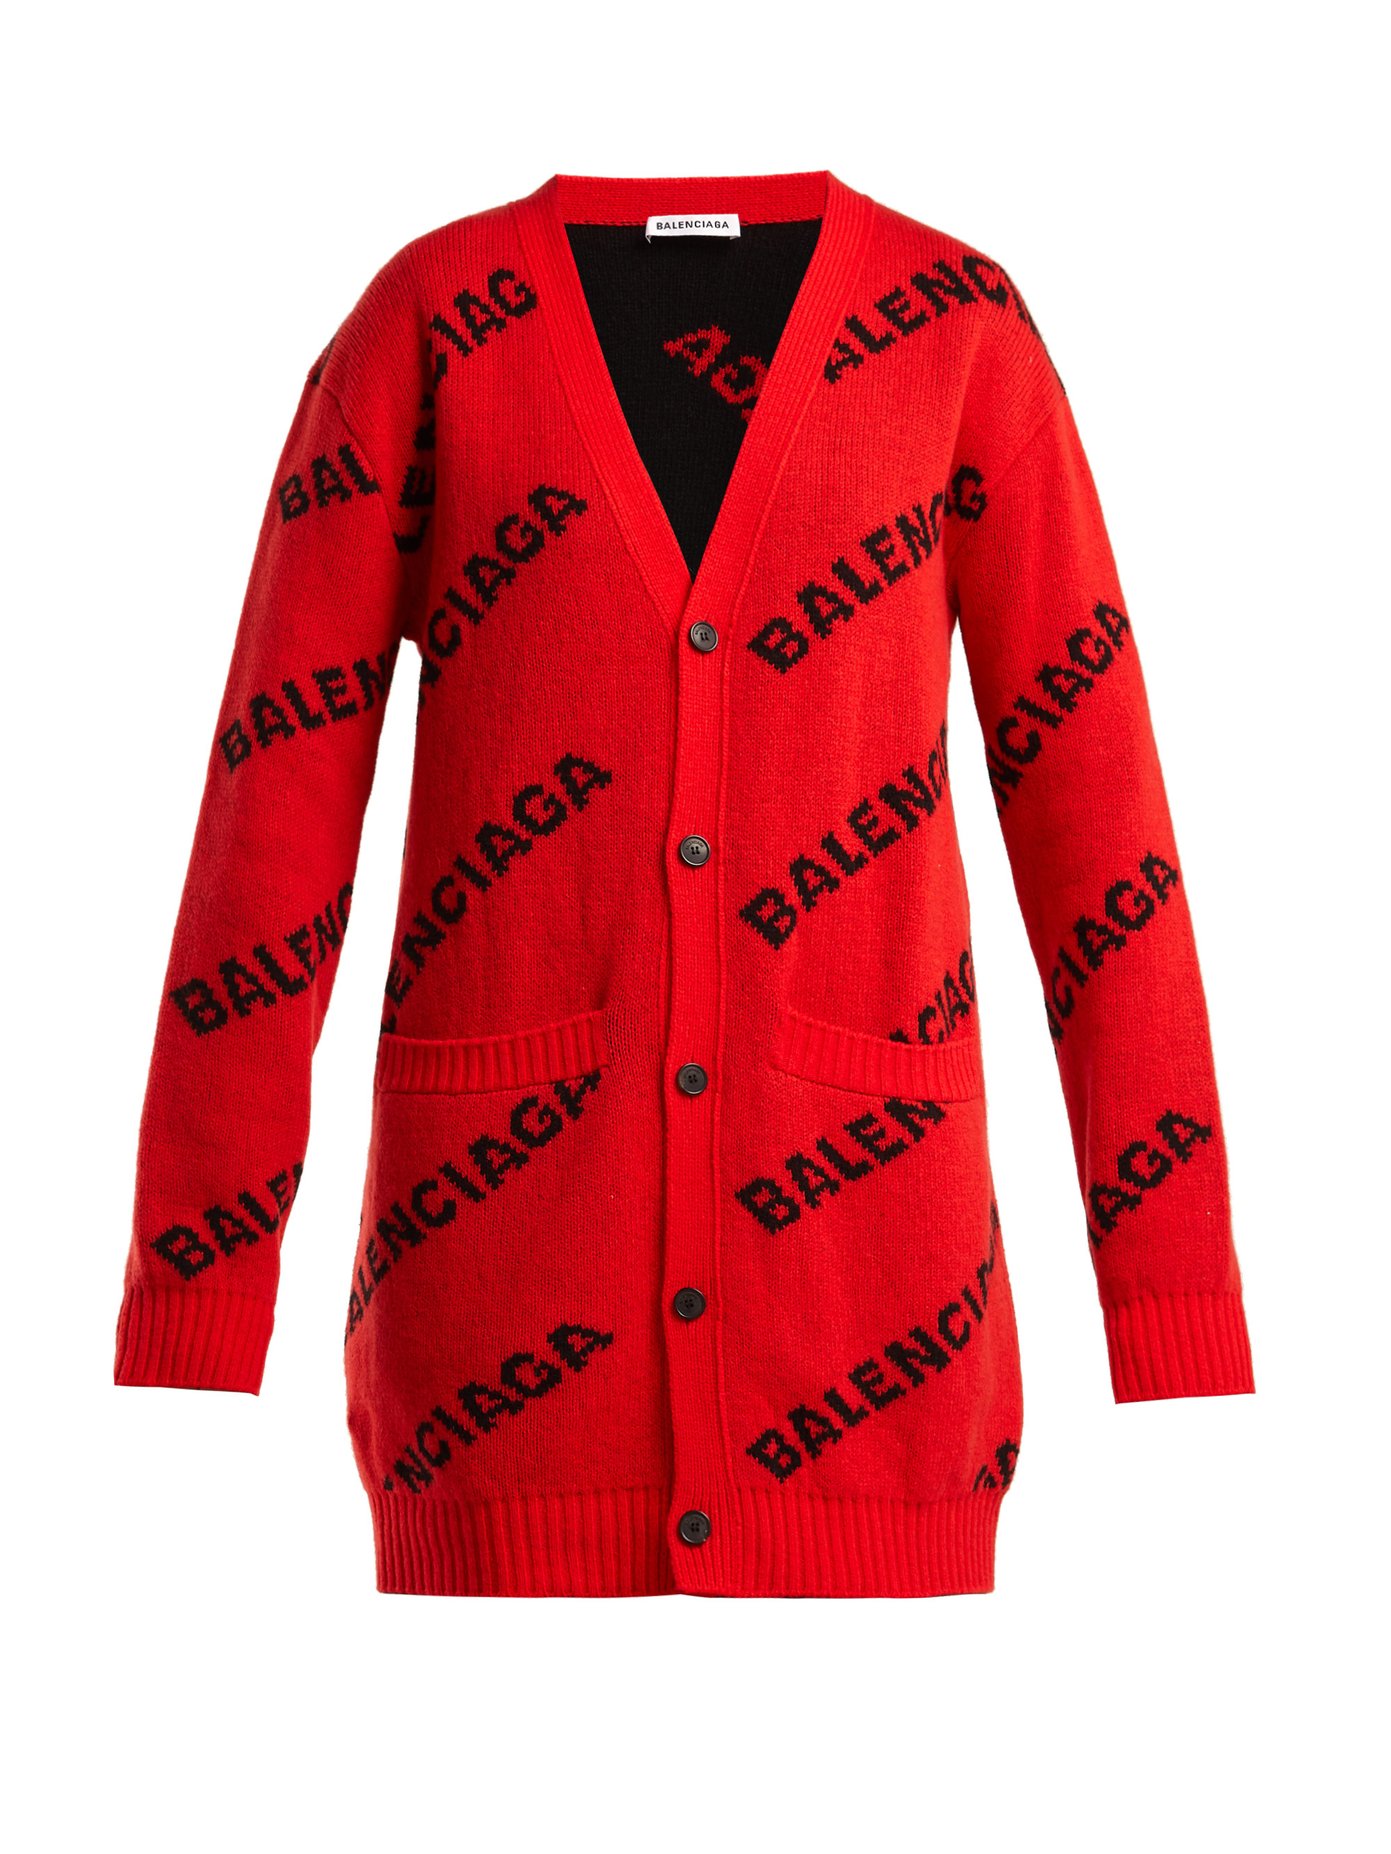 balenciaga red sweater